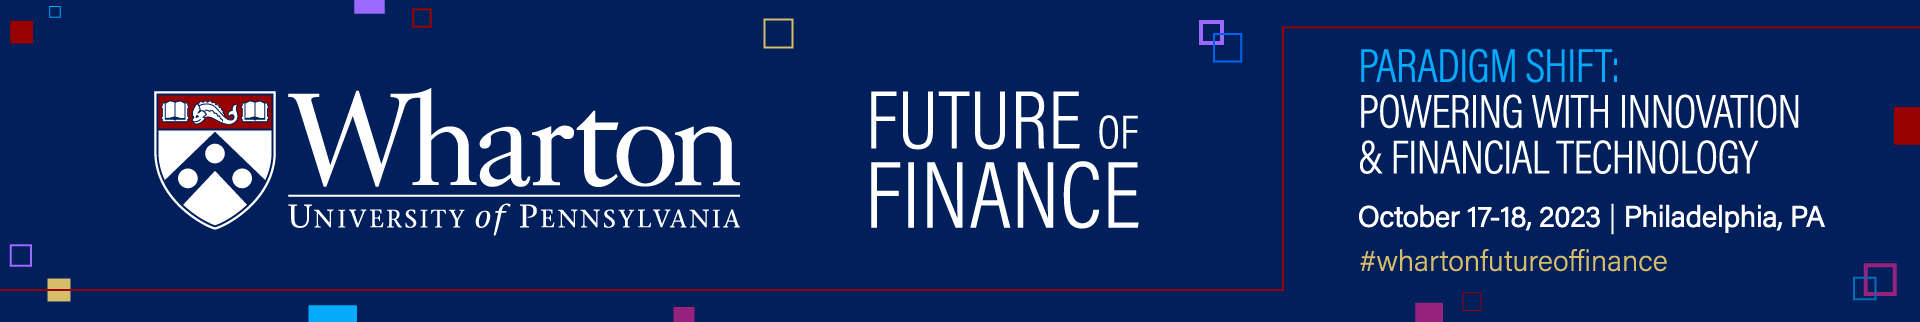 Wharton Future of Finance Forum 2023